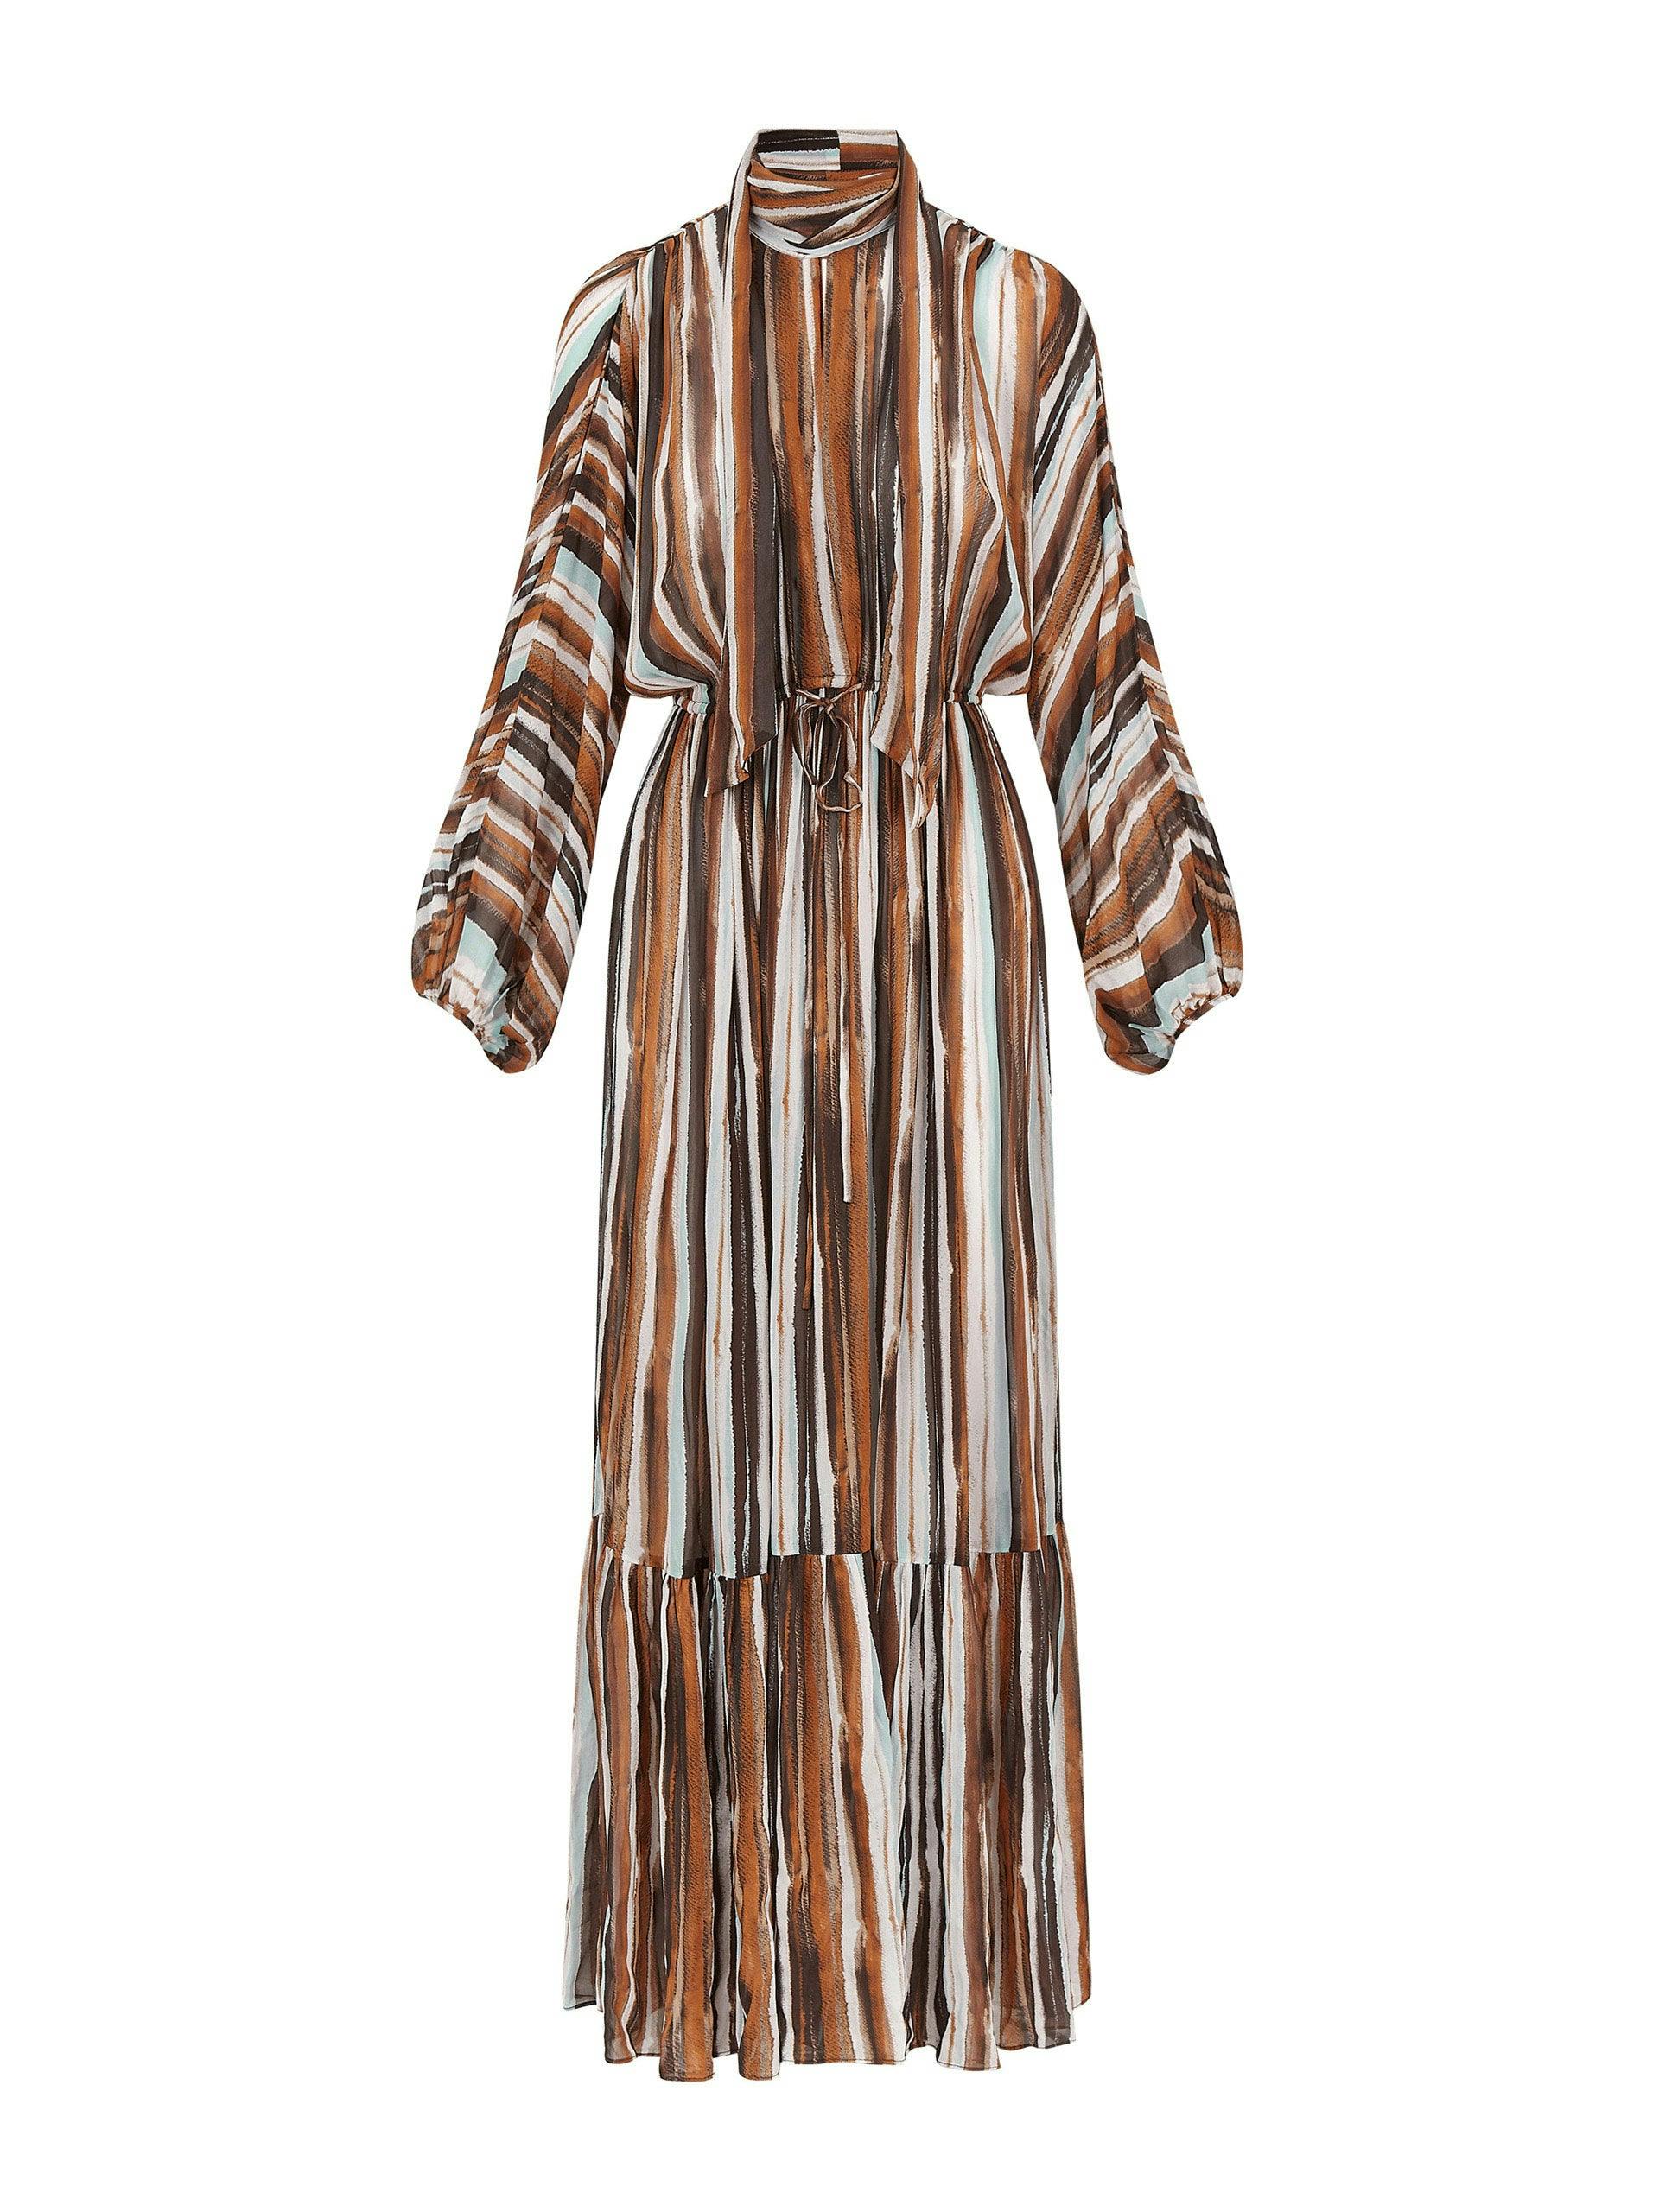 Striped Theo dress